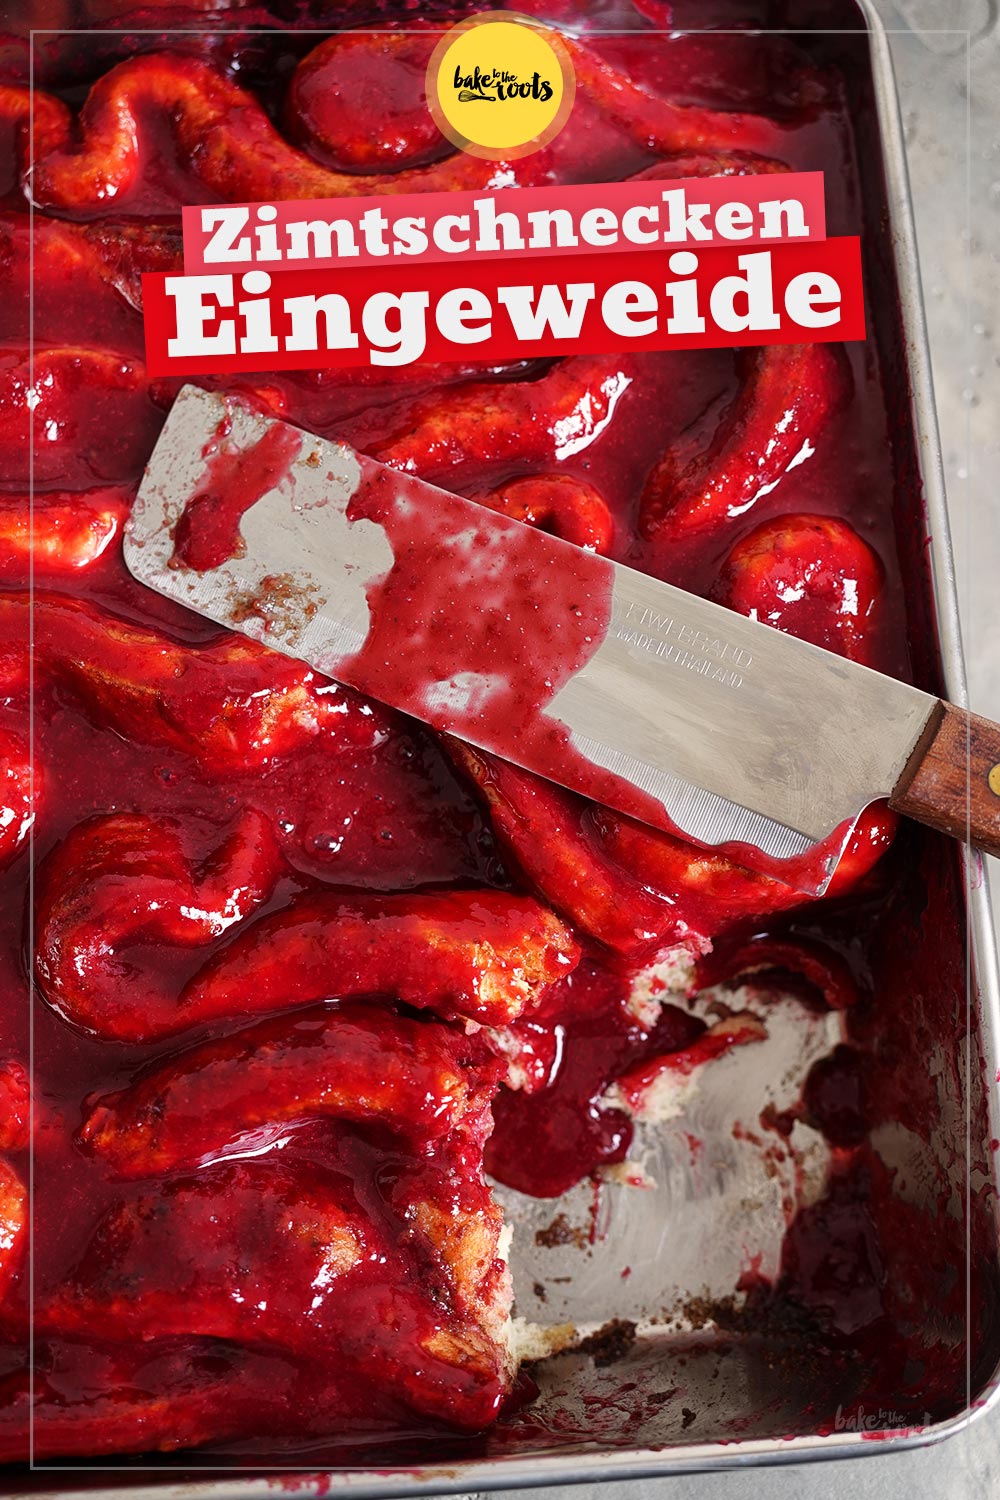 Halloween "Eingeweide" Cinnamon Rolls | Bake to the roots